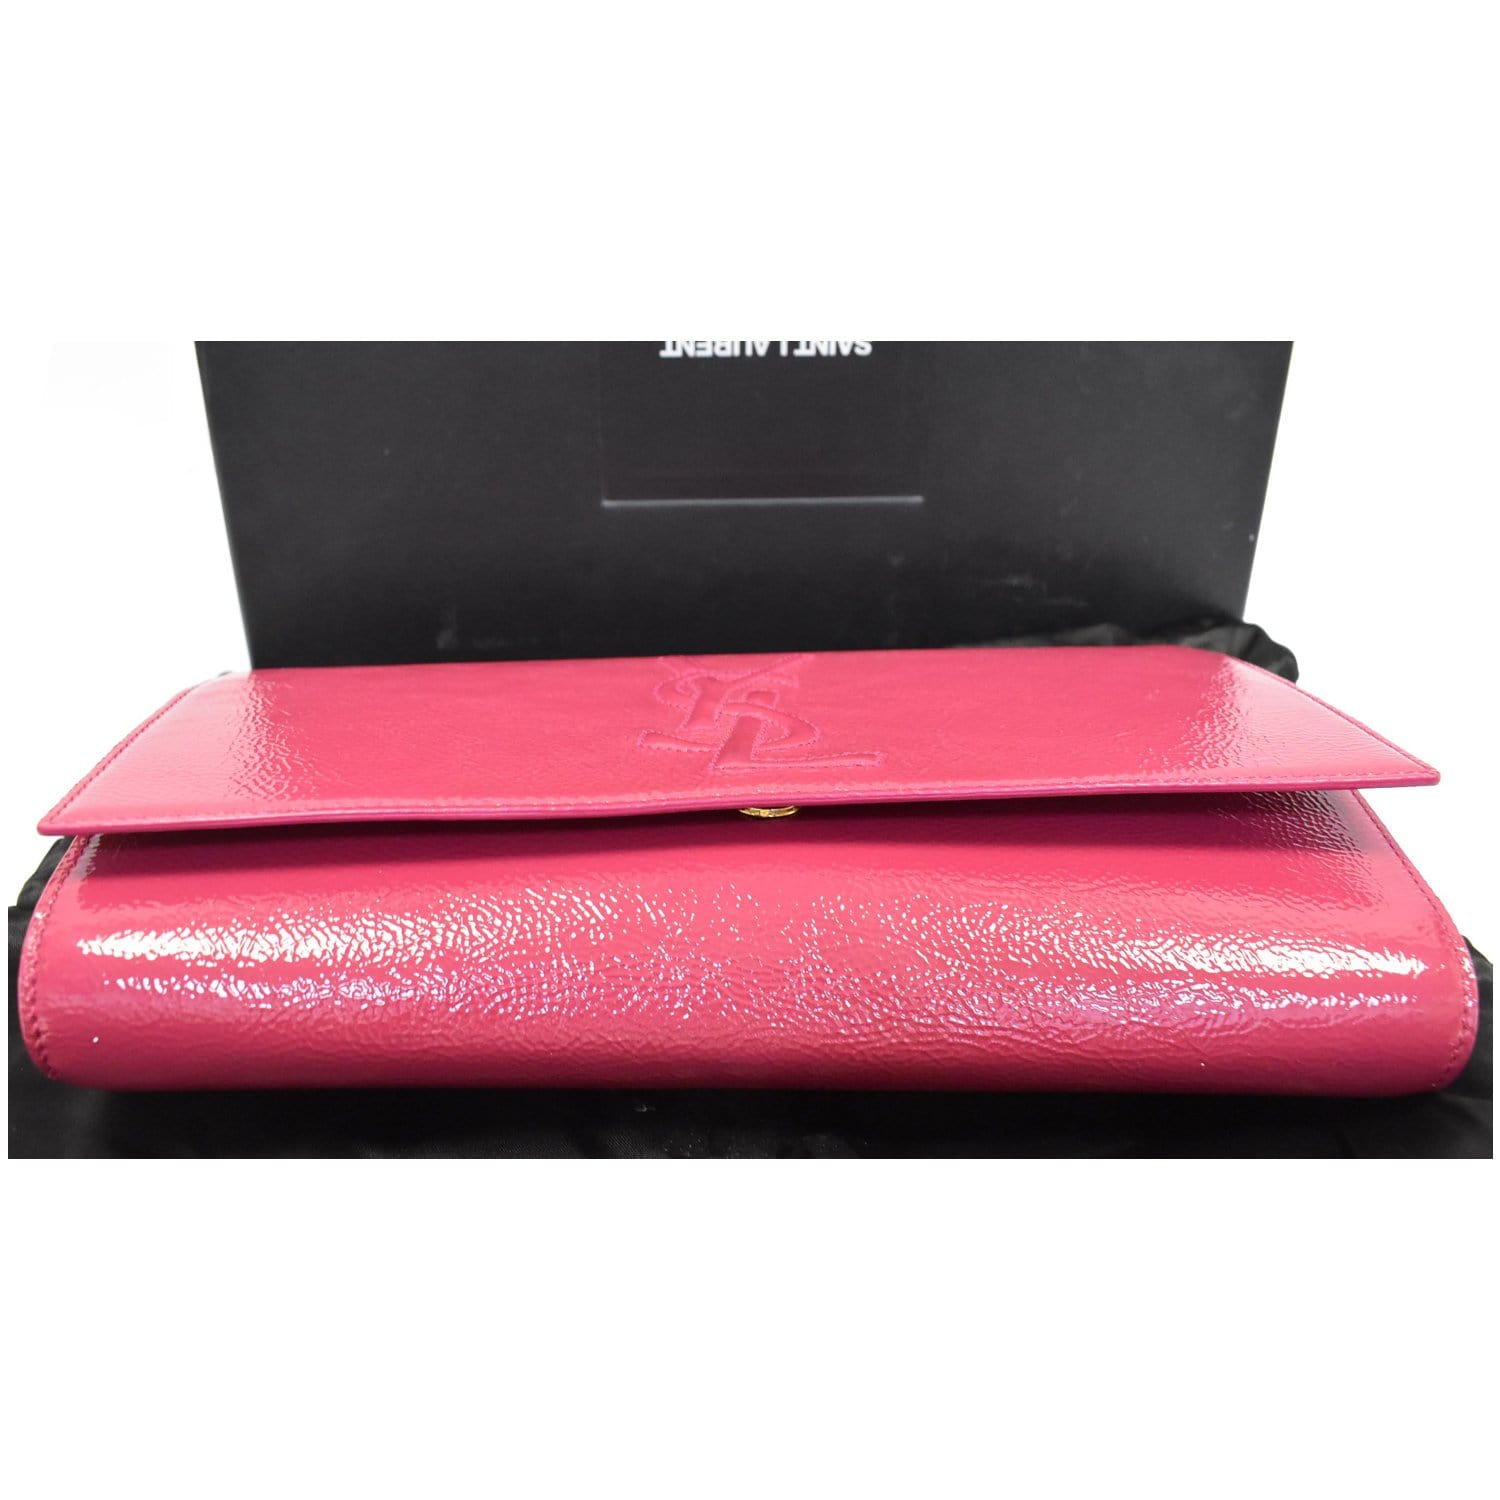 Belle de jour patent leather clutch bag Yves Saint Laurent Red in